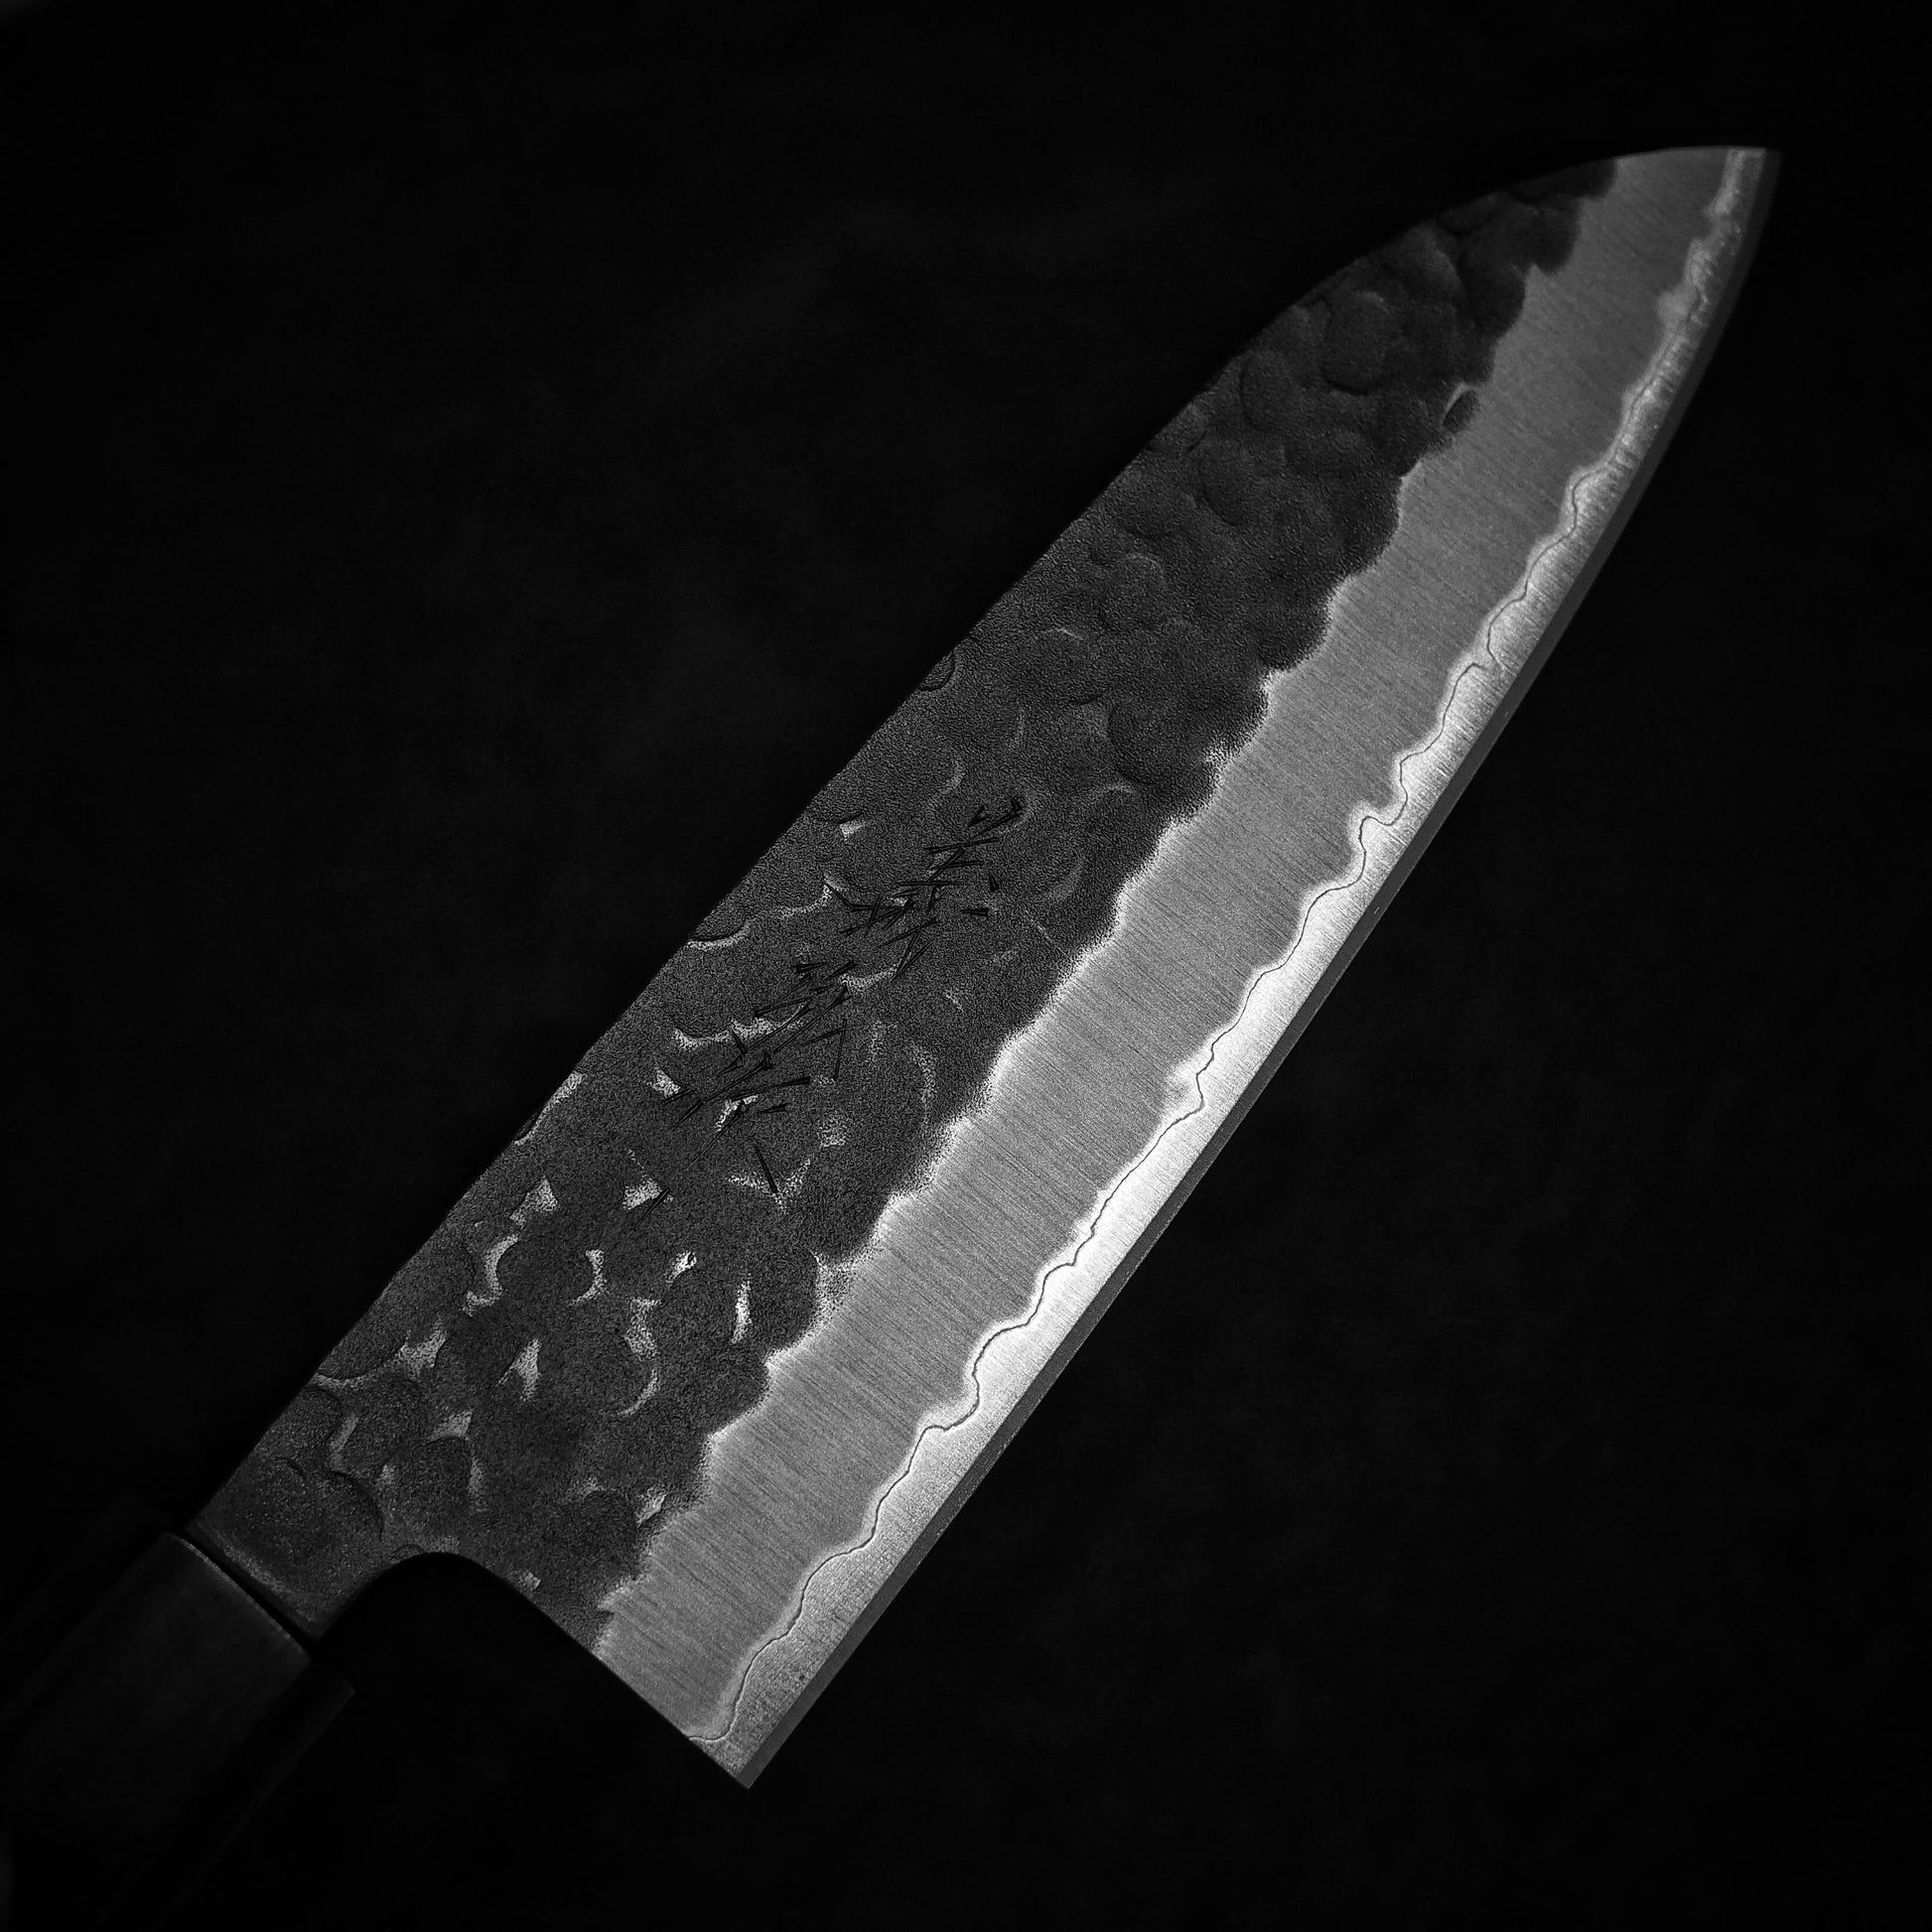 Yoshihiro tsuchime kurouchi AS (aogami super) 165mm santoku (with saya) - Zahocho Japanese Knives